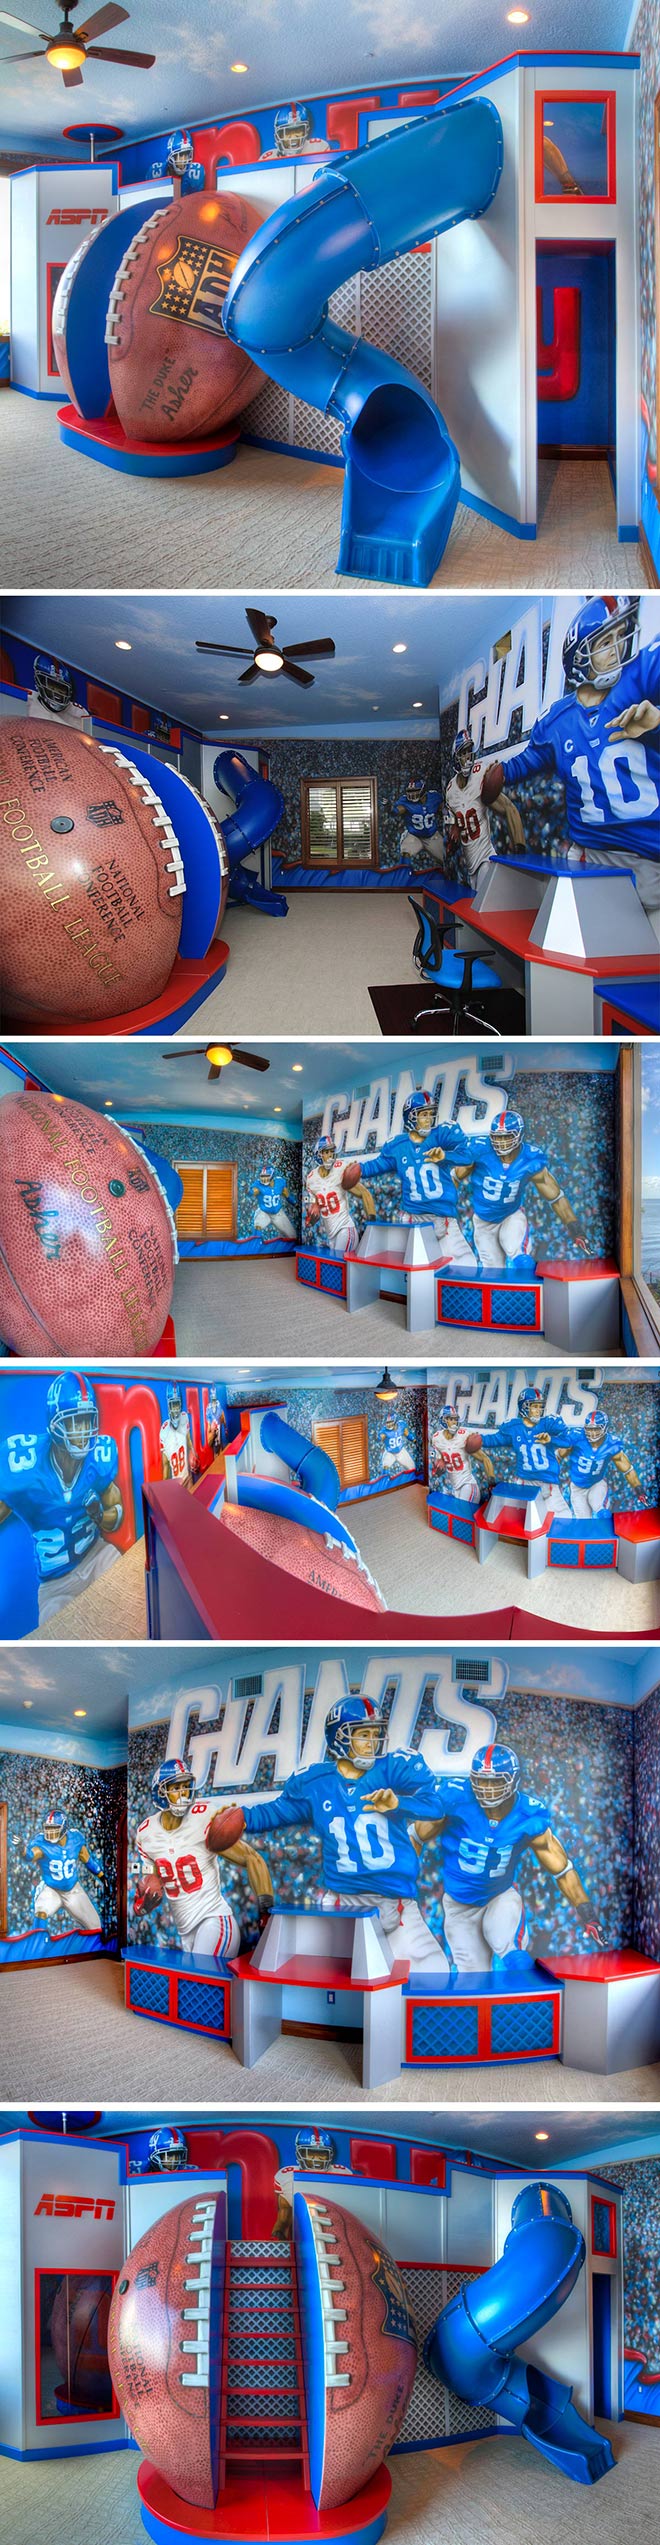 Football Playroom - Design par Jason Hulfish